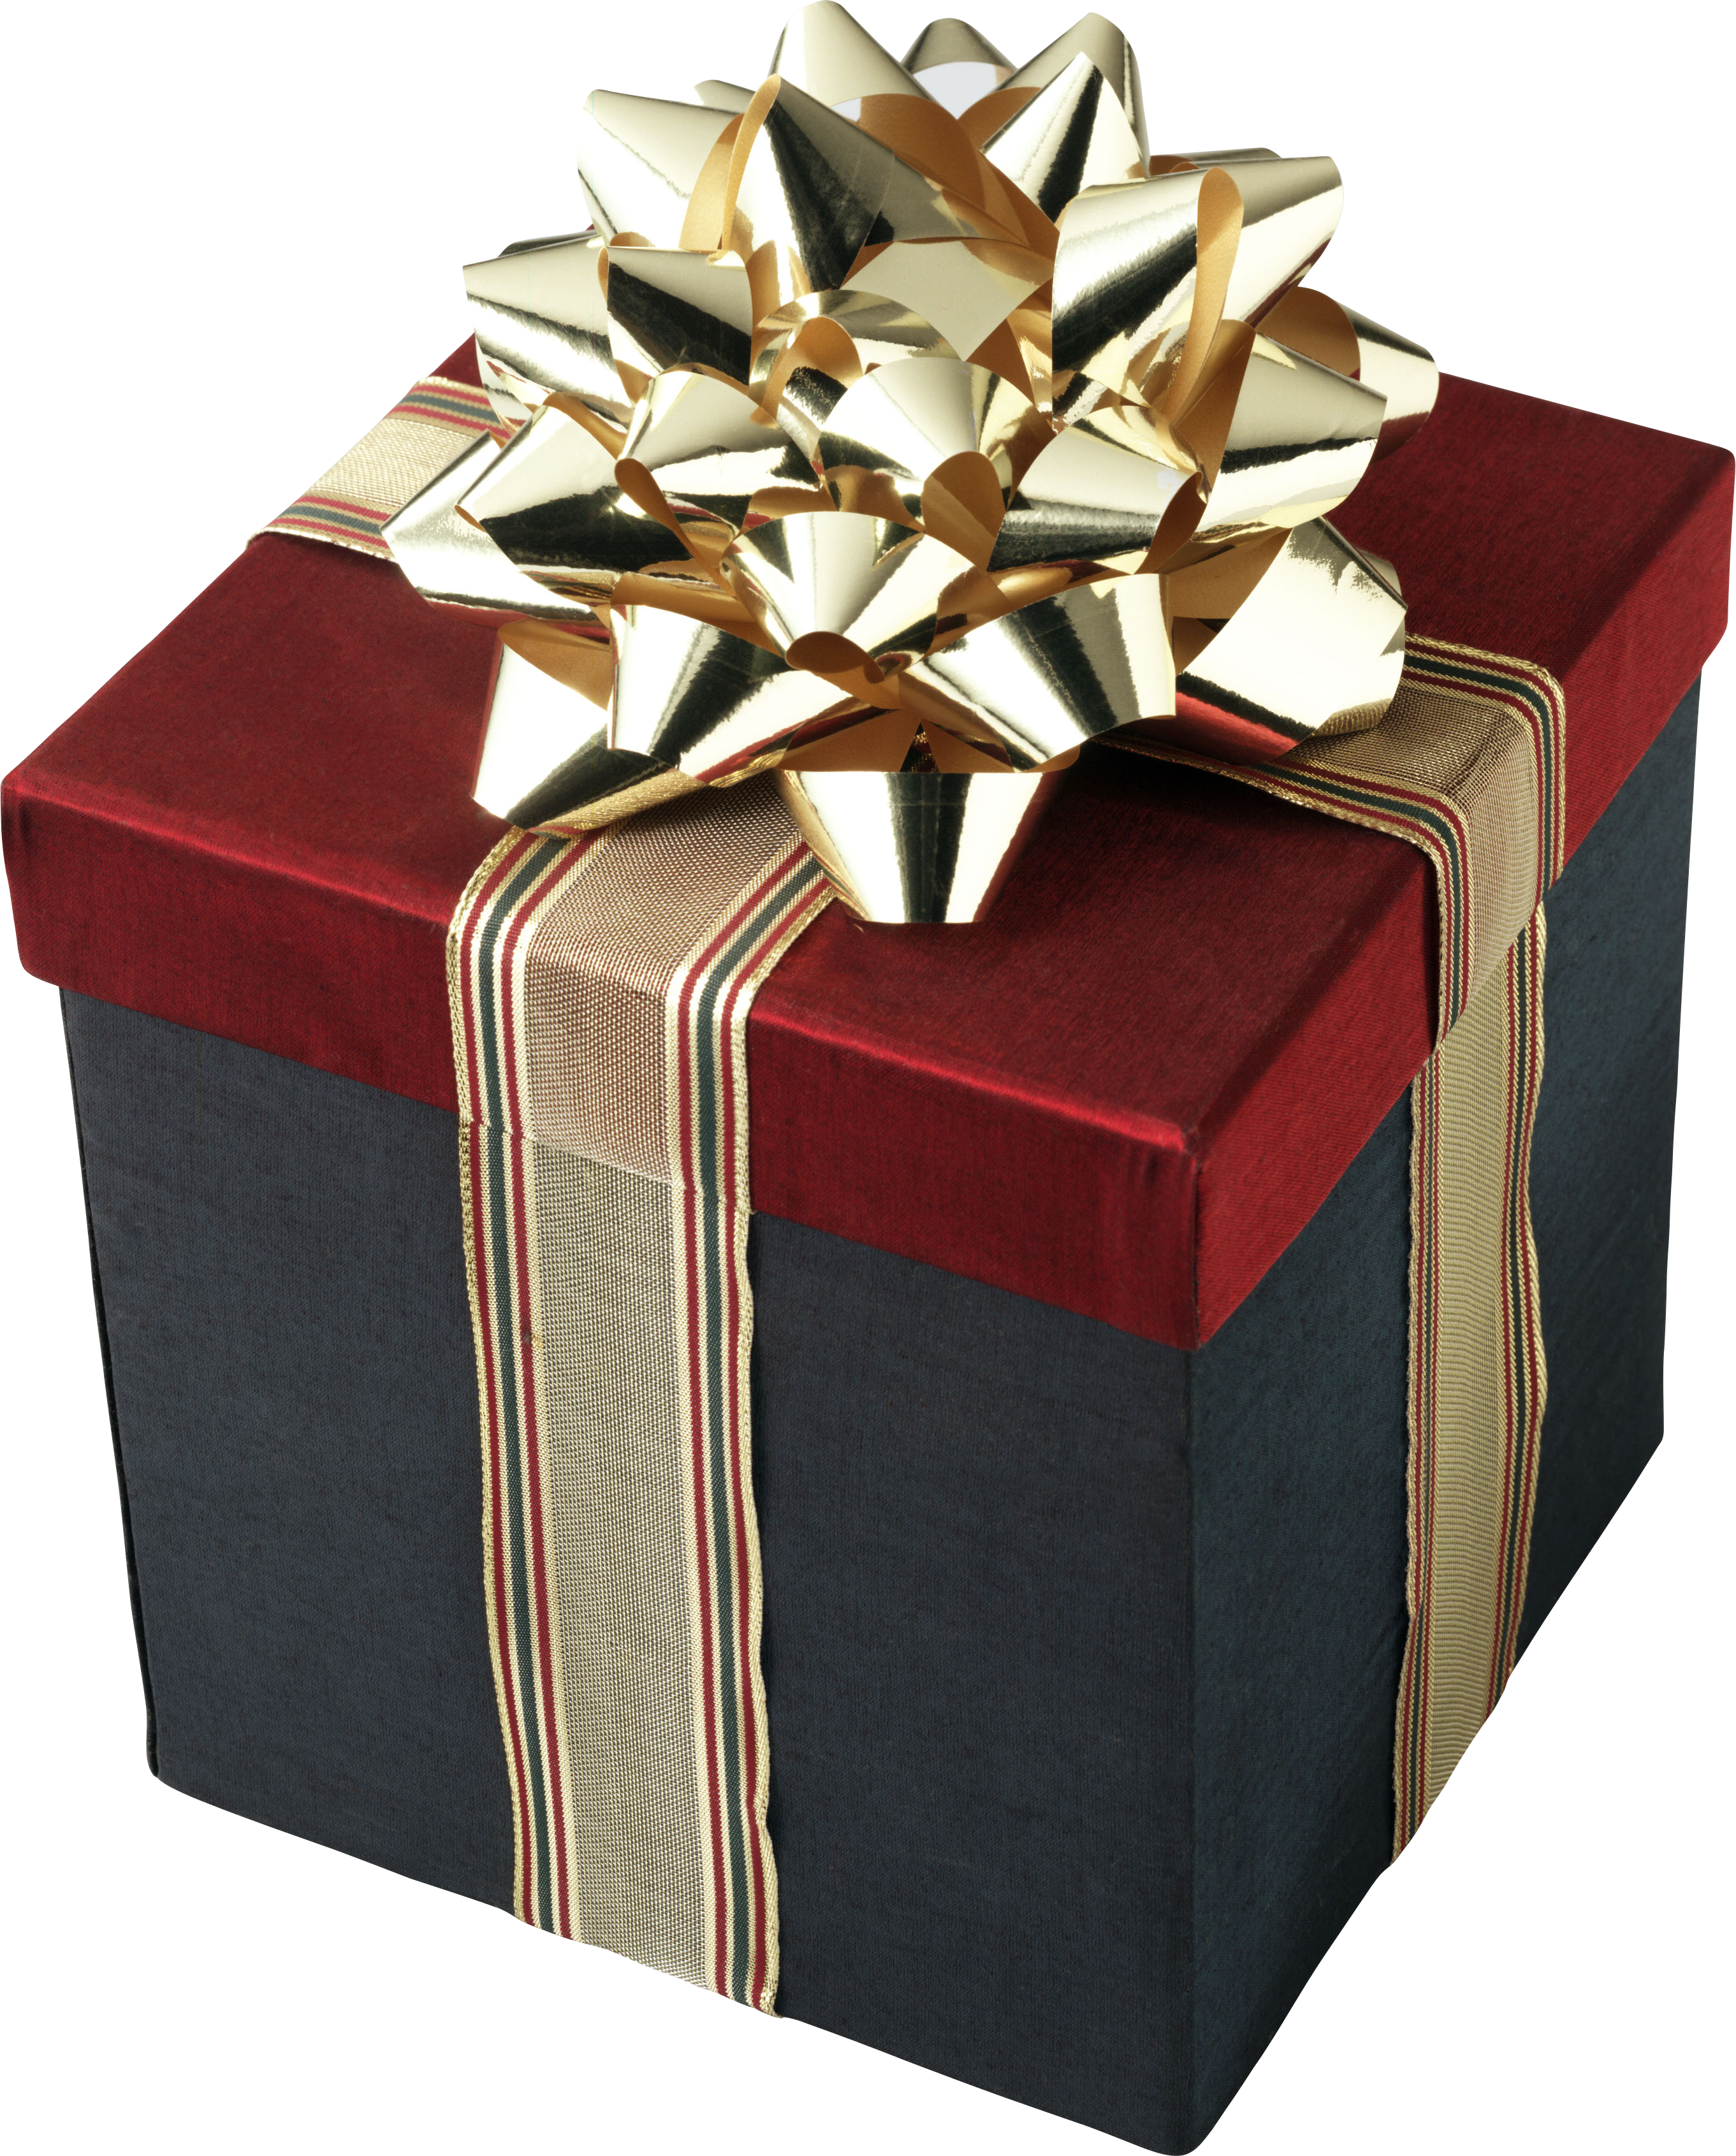 Сюрприз 2 5. Подарок. Коробка подарок с бантом. Коробка для подарка. Большая коробка для подарка.